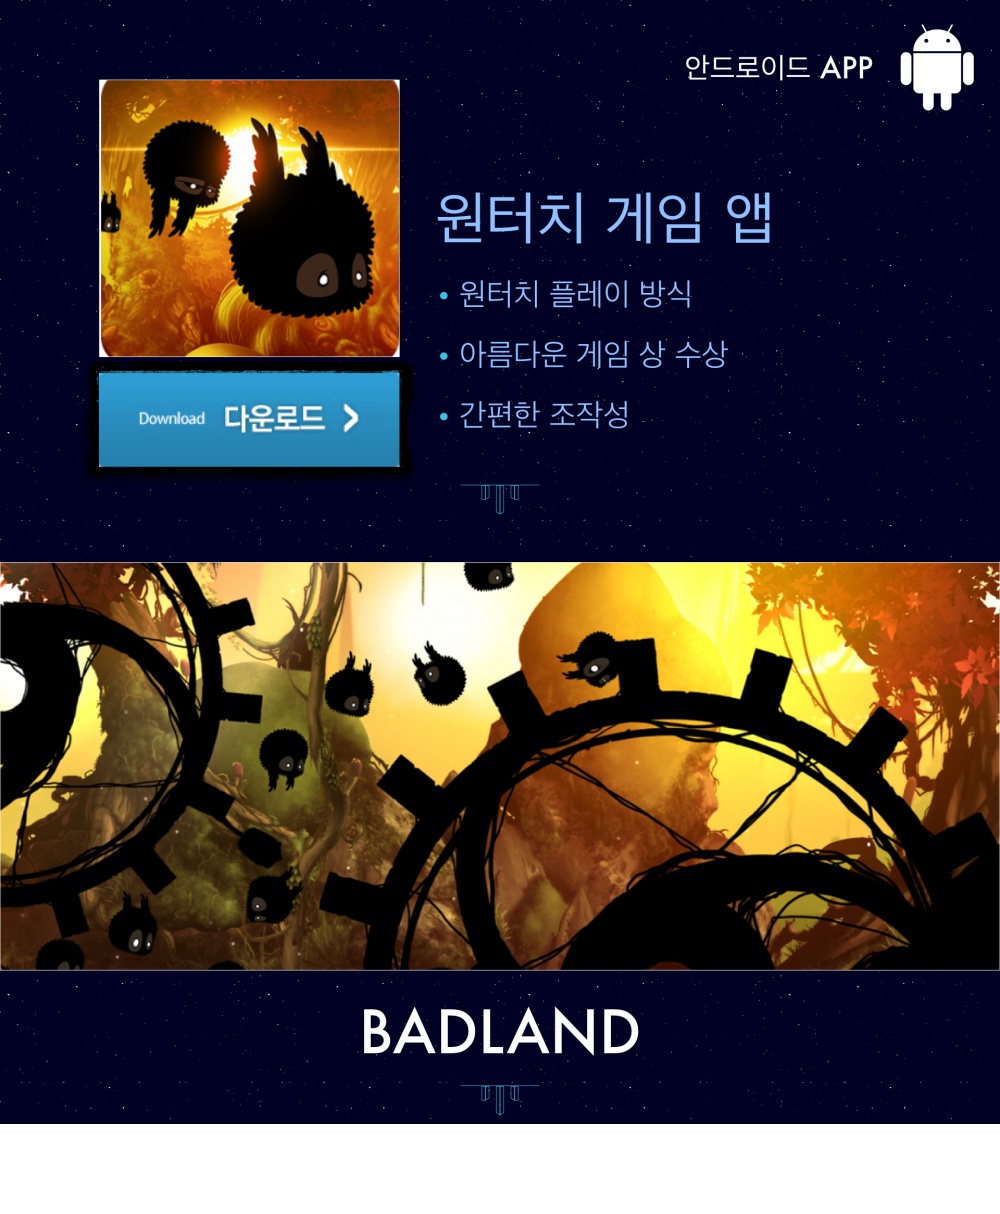 https://play.google.com/store/apps/details?id=com.frogmind.badland